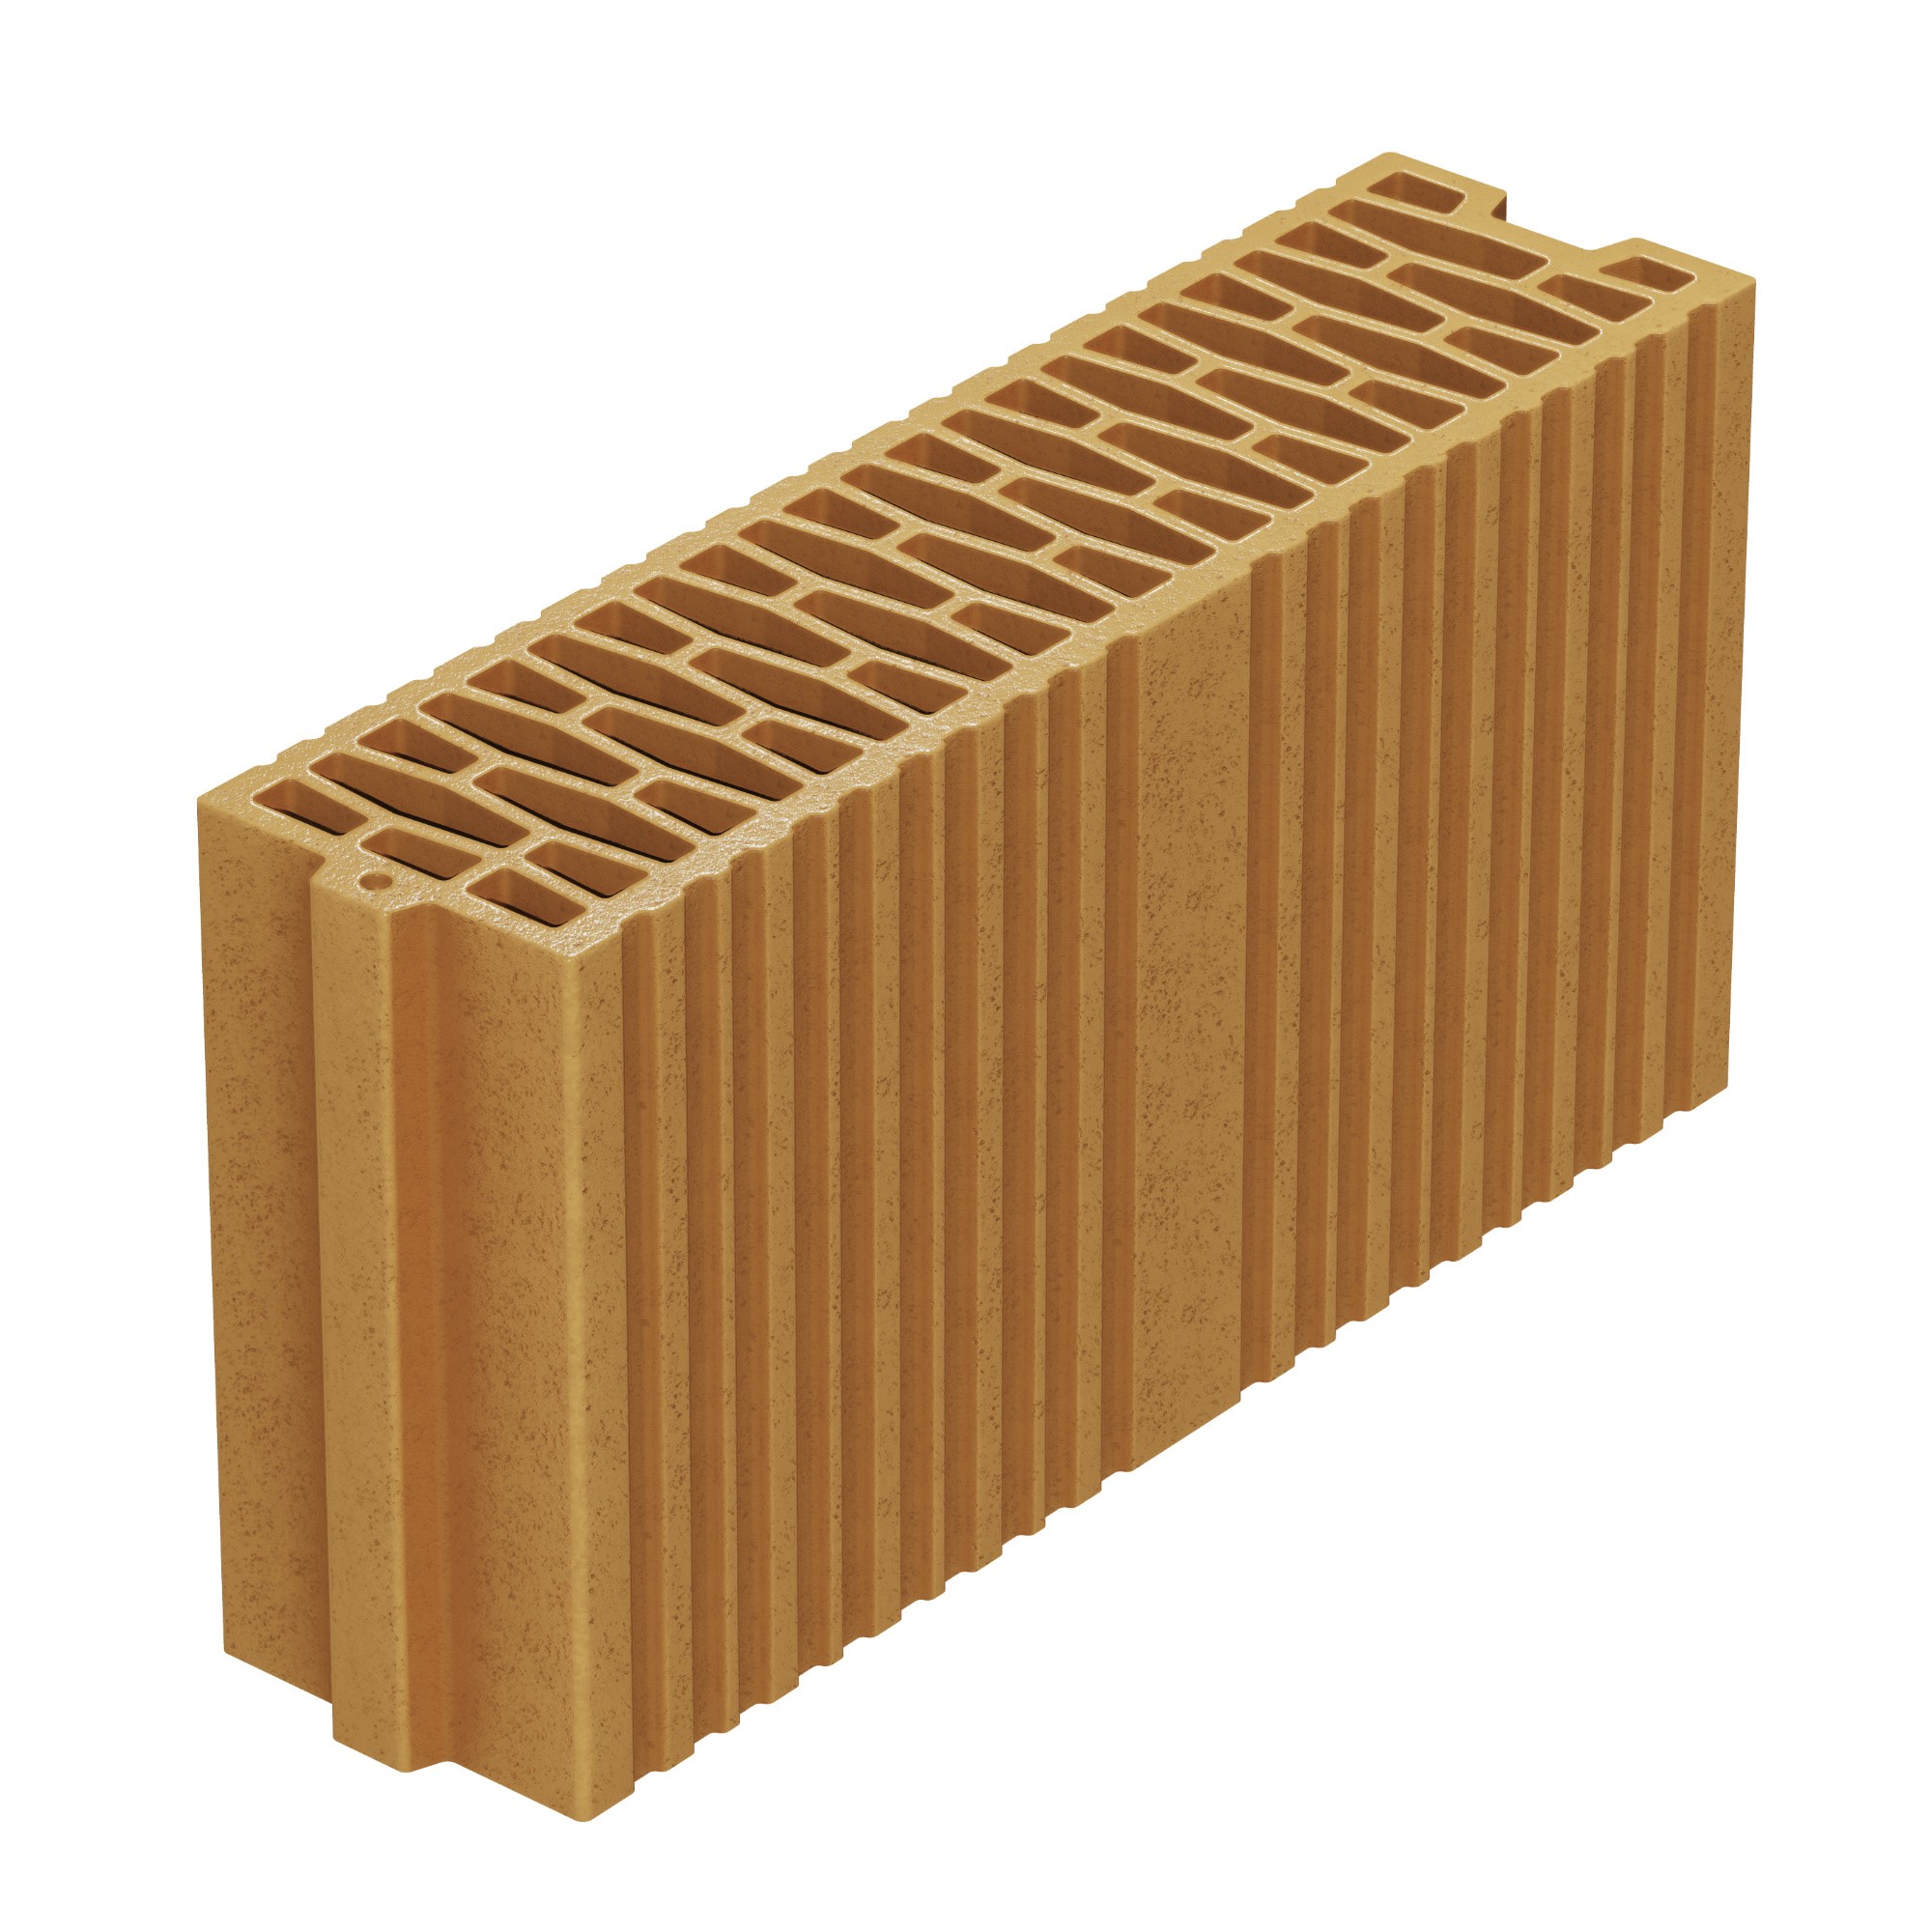 Engineering-Bricks - Evoceramic Cemacon Brick 12 joggle joint, 460 x 120 x 238 mm, https:maxbau.ro